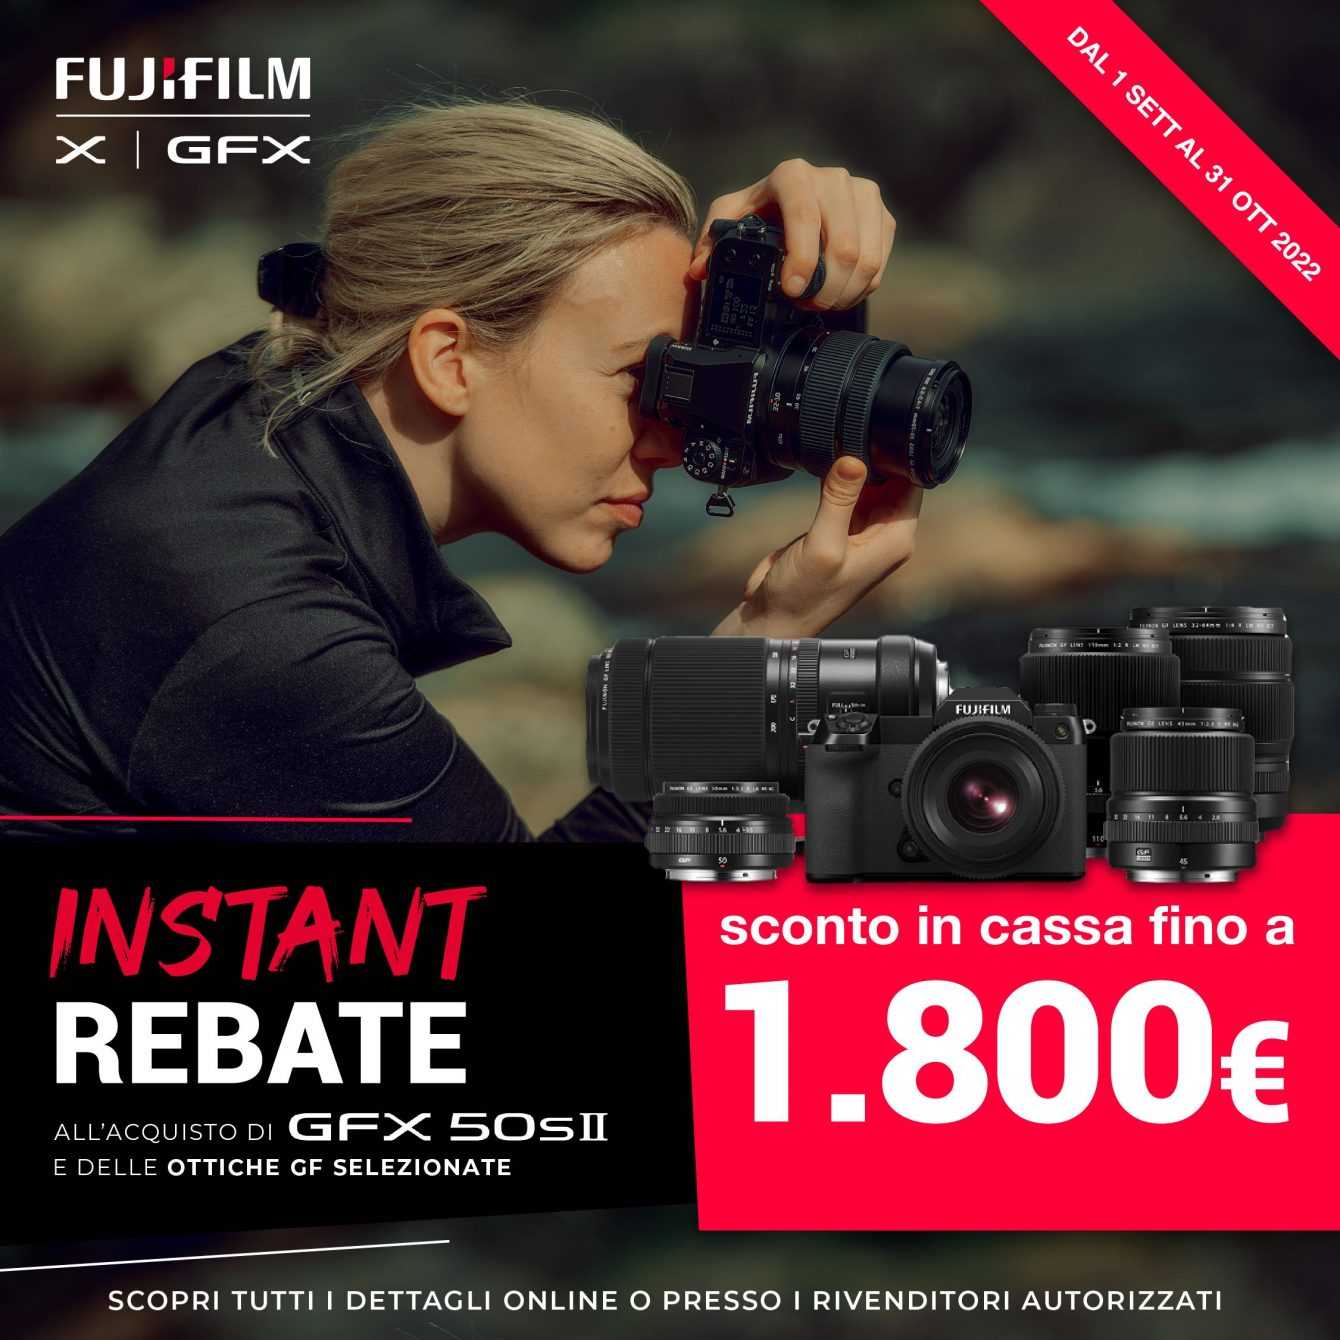 Fujifilm Instant Rebate GFX range: € 1,800 savings